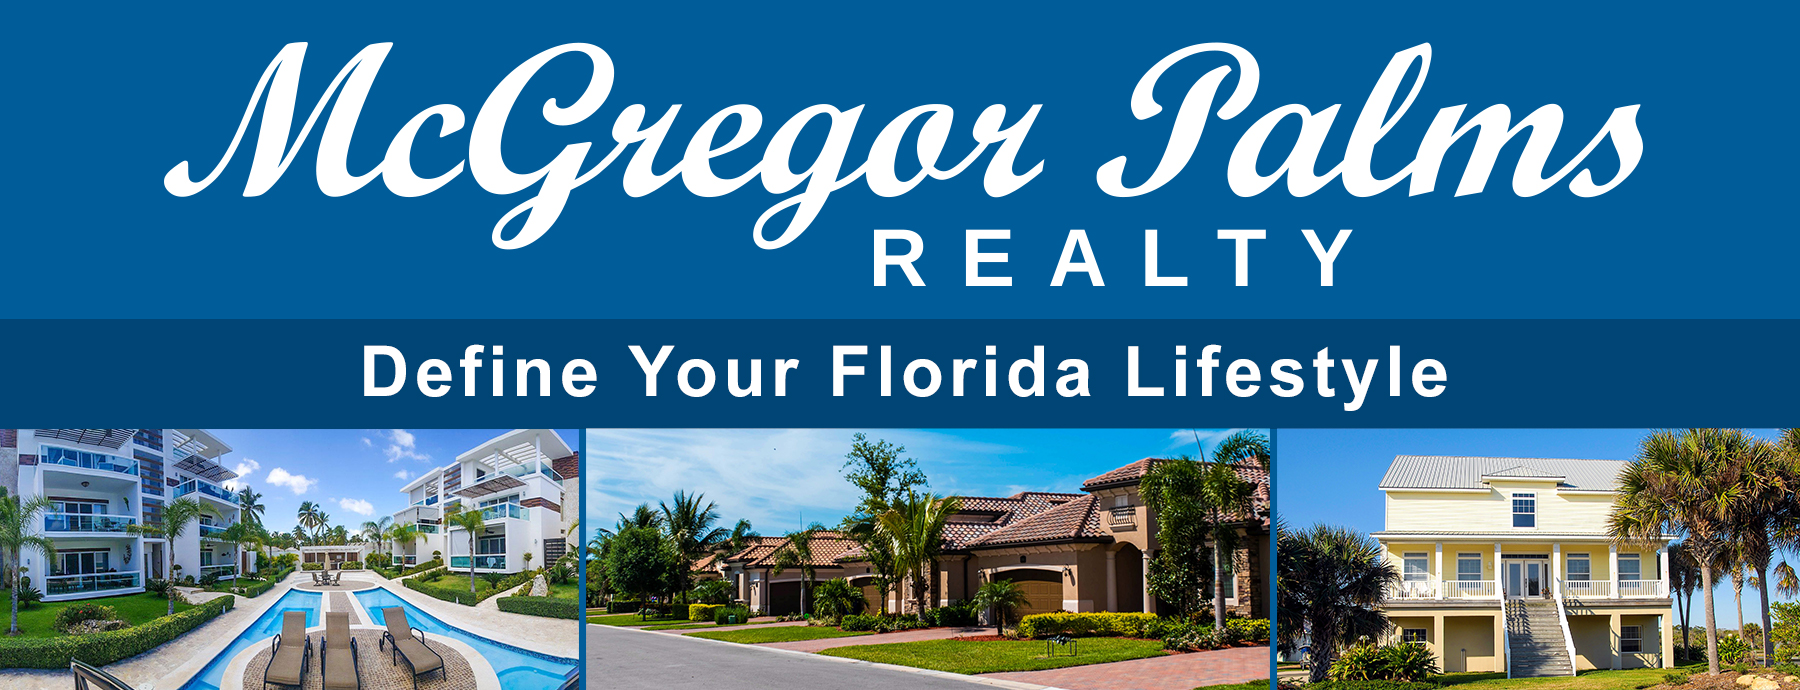 McGregor Palms Realty Banner - Define Your Florida Lifestyle